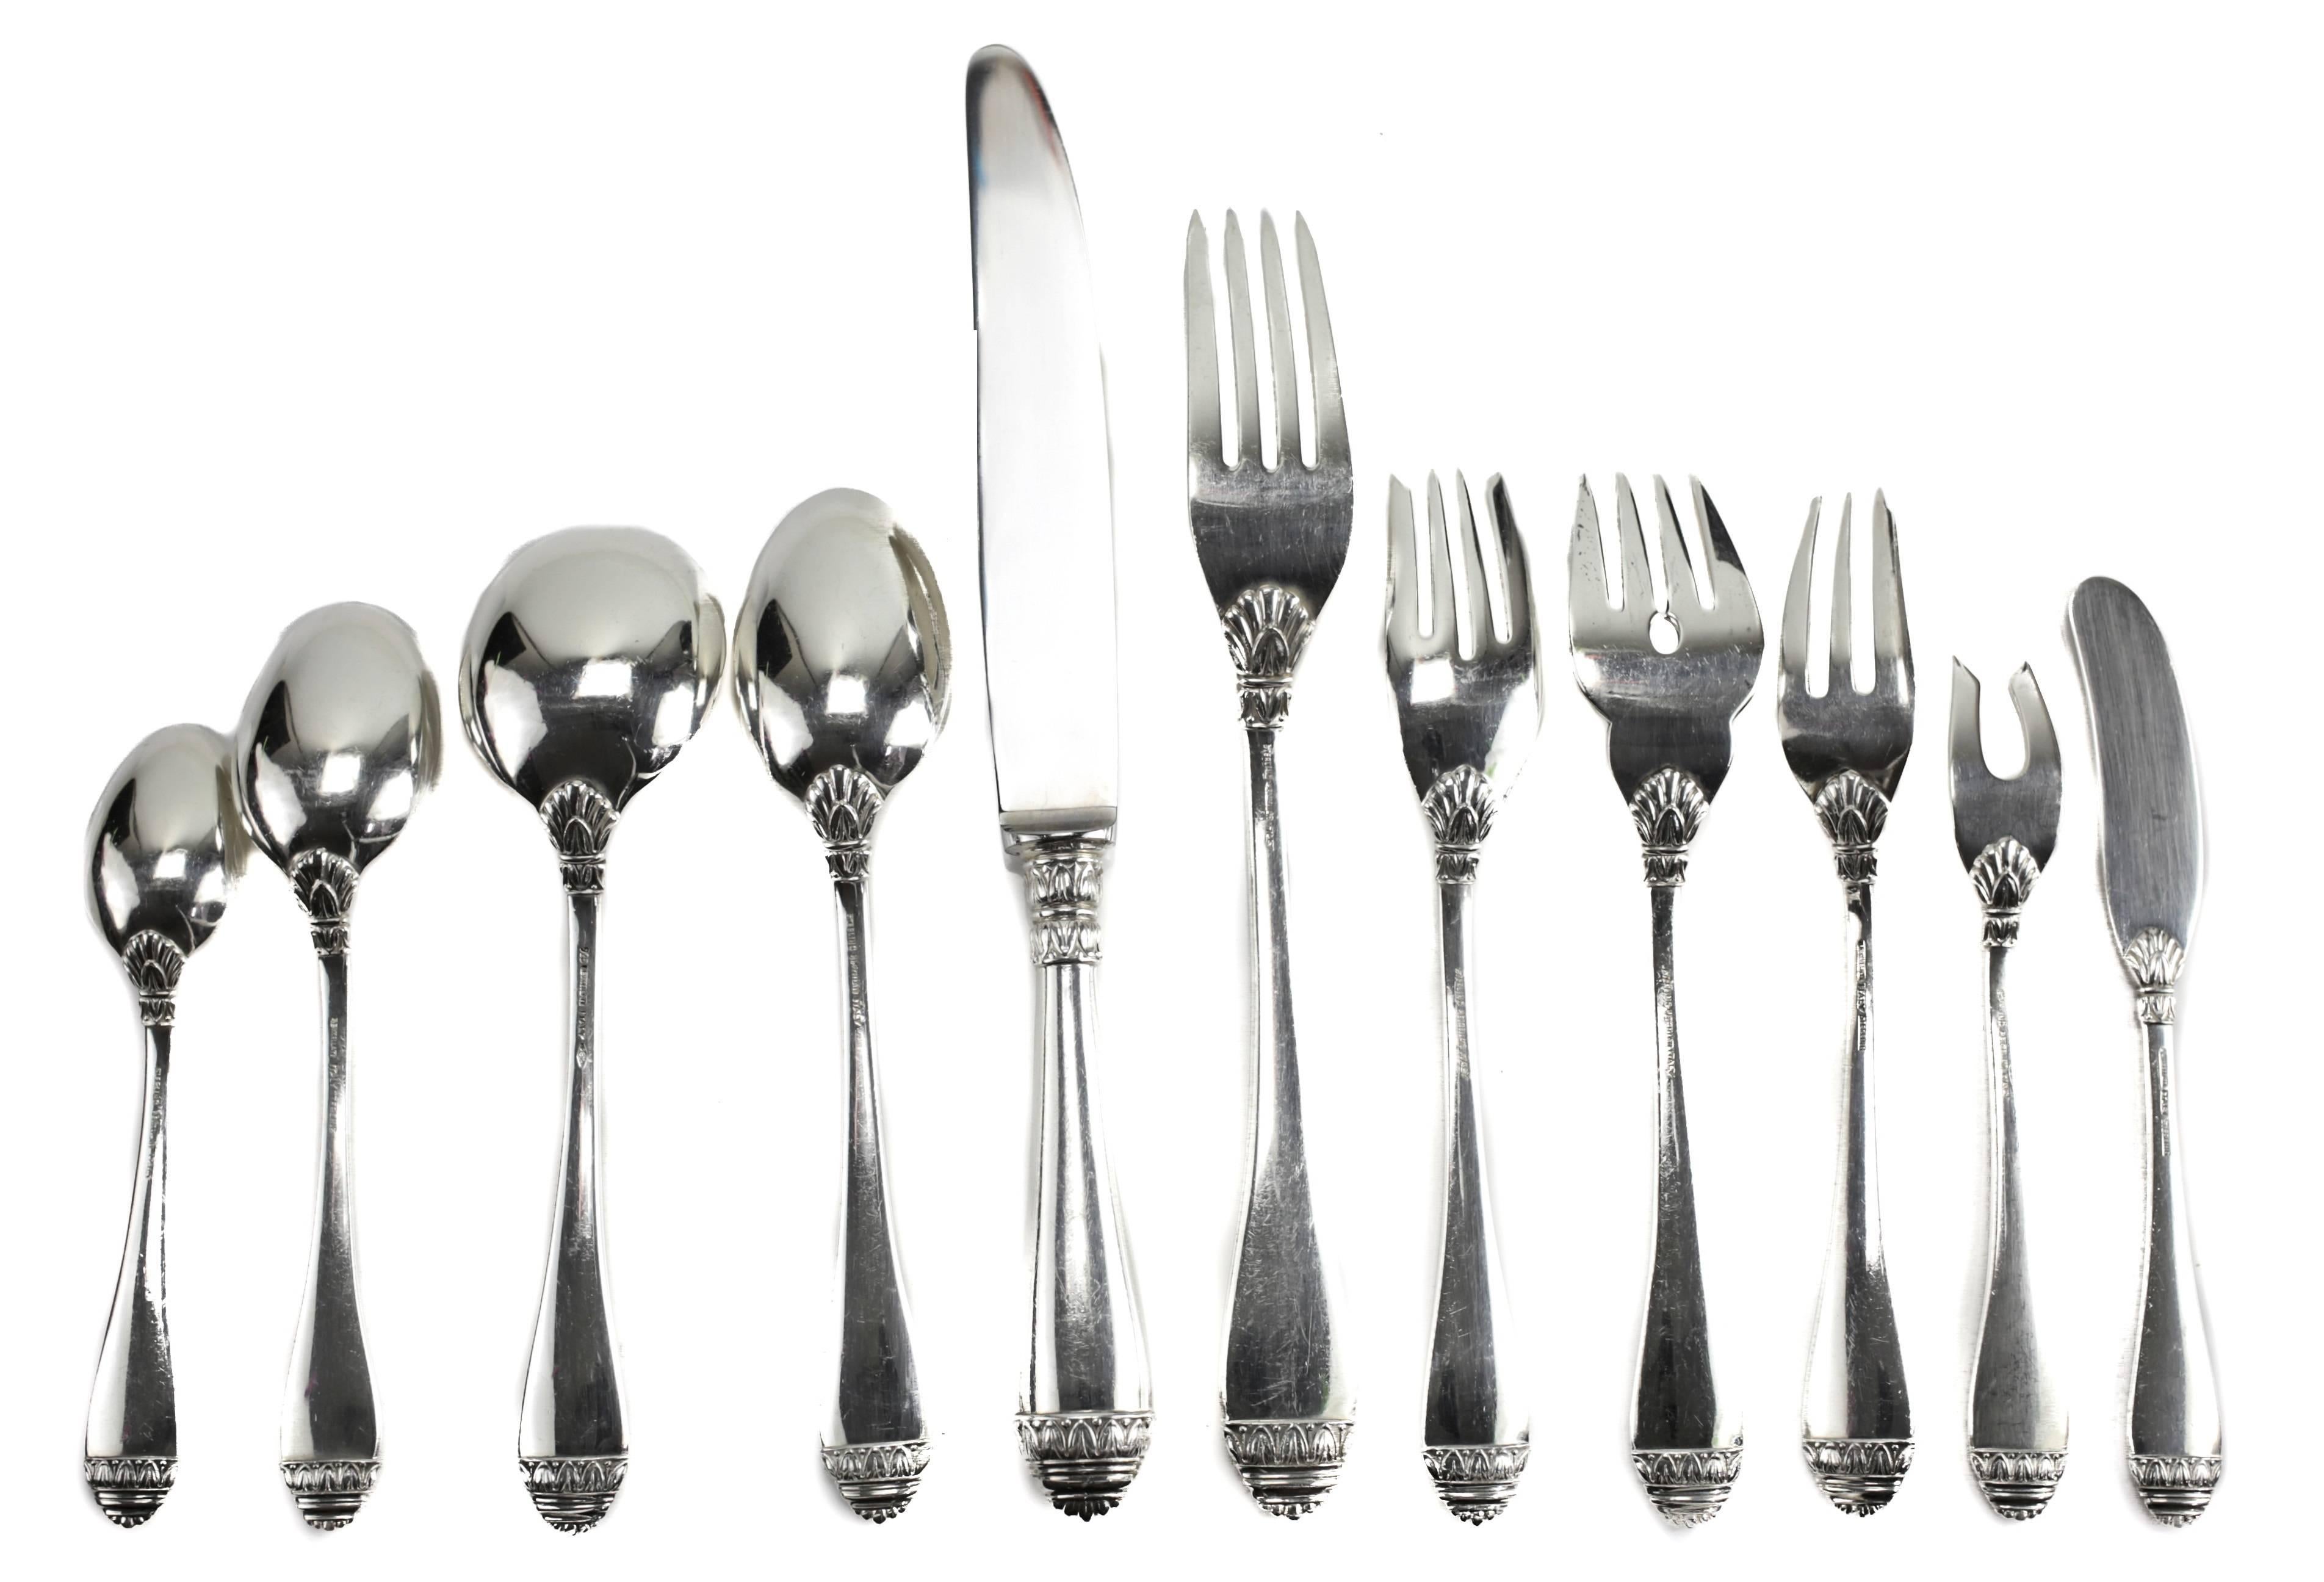 A large 144-piece Buccellati sterling silver service in the discontinued French Empire pattern. 

The service is comprised of 12 of each: dinner knives, dinner forks, salad forks, fish forks, cake forks, lemon forks, dessert spoons, demitasse